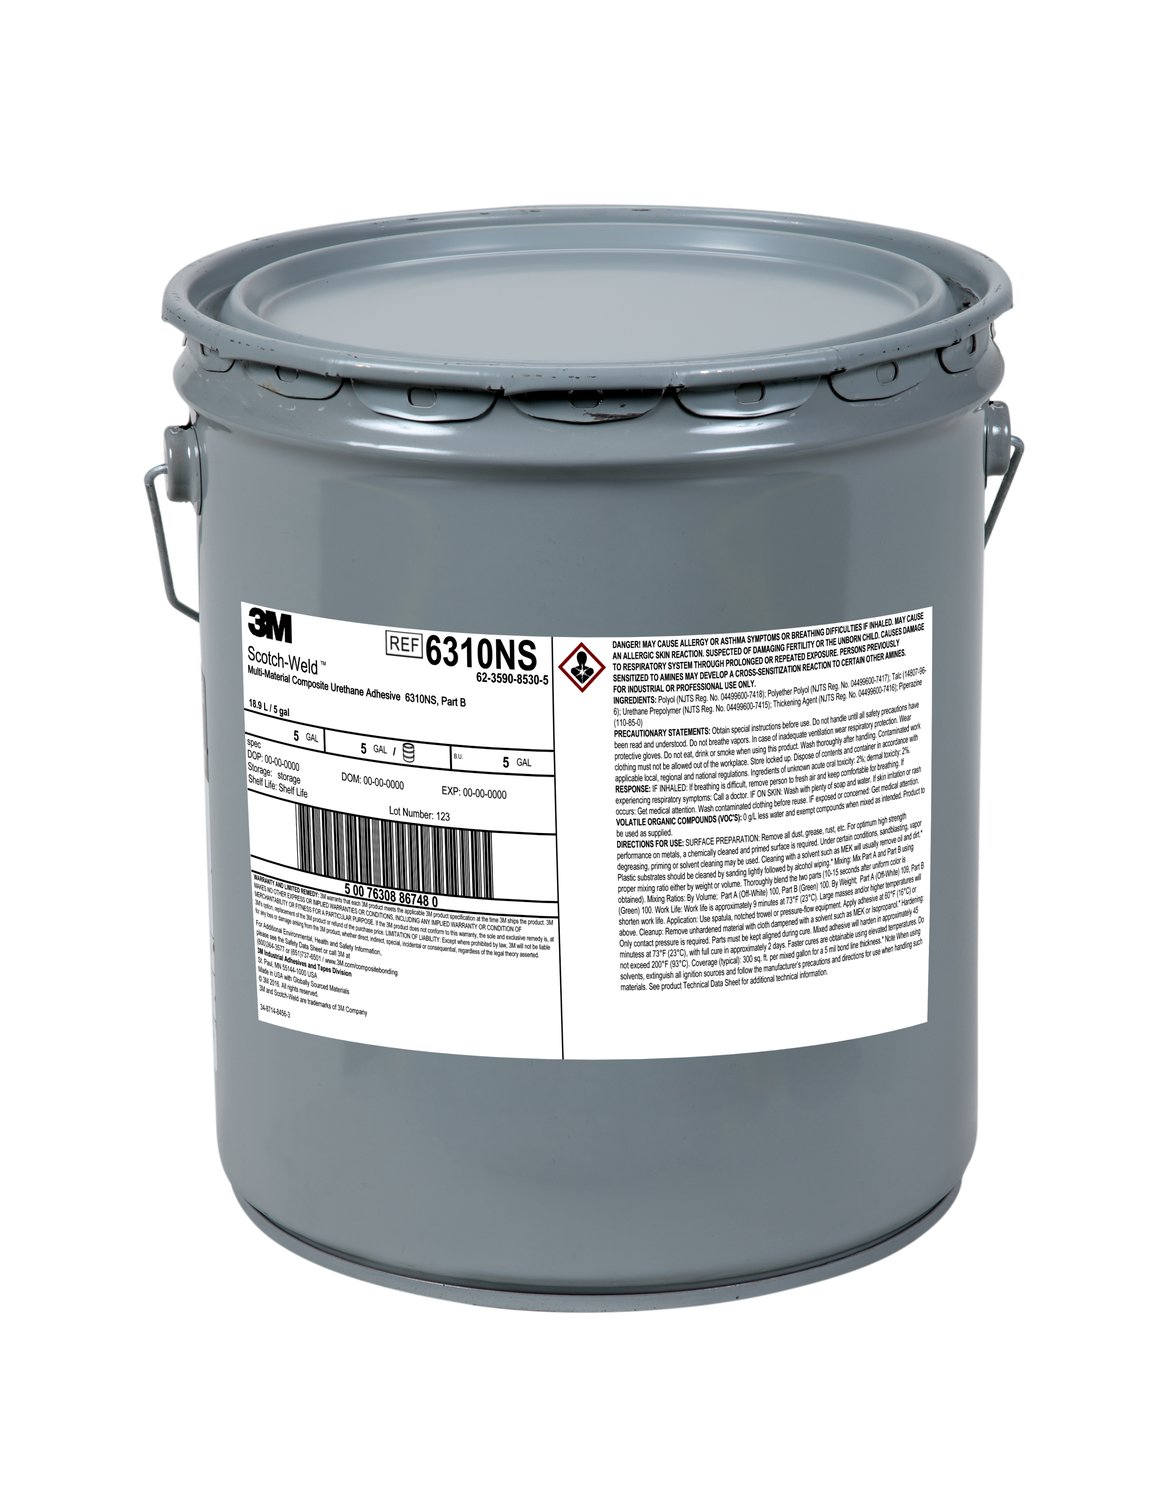 7100143915 - 3M Scotch-Weld Multi-Material Composite Urethane Adhesive 6310NS,
Green, Part B, 5 Gallon (Pail), Drum